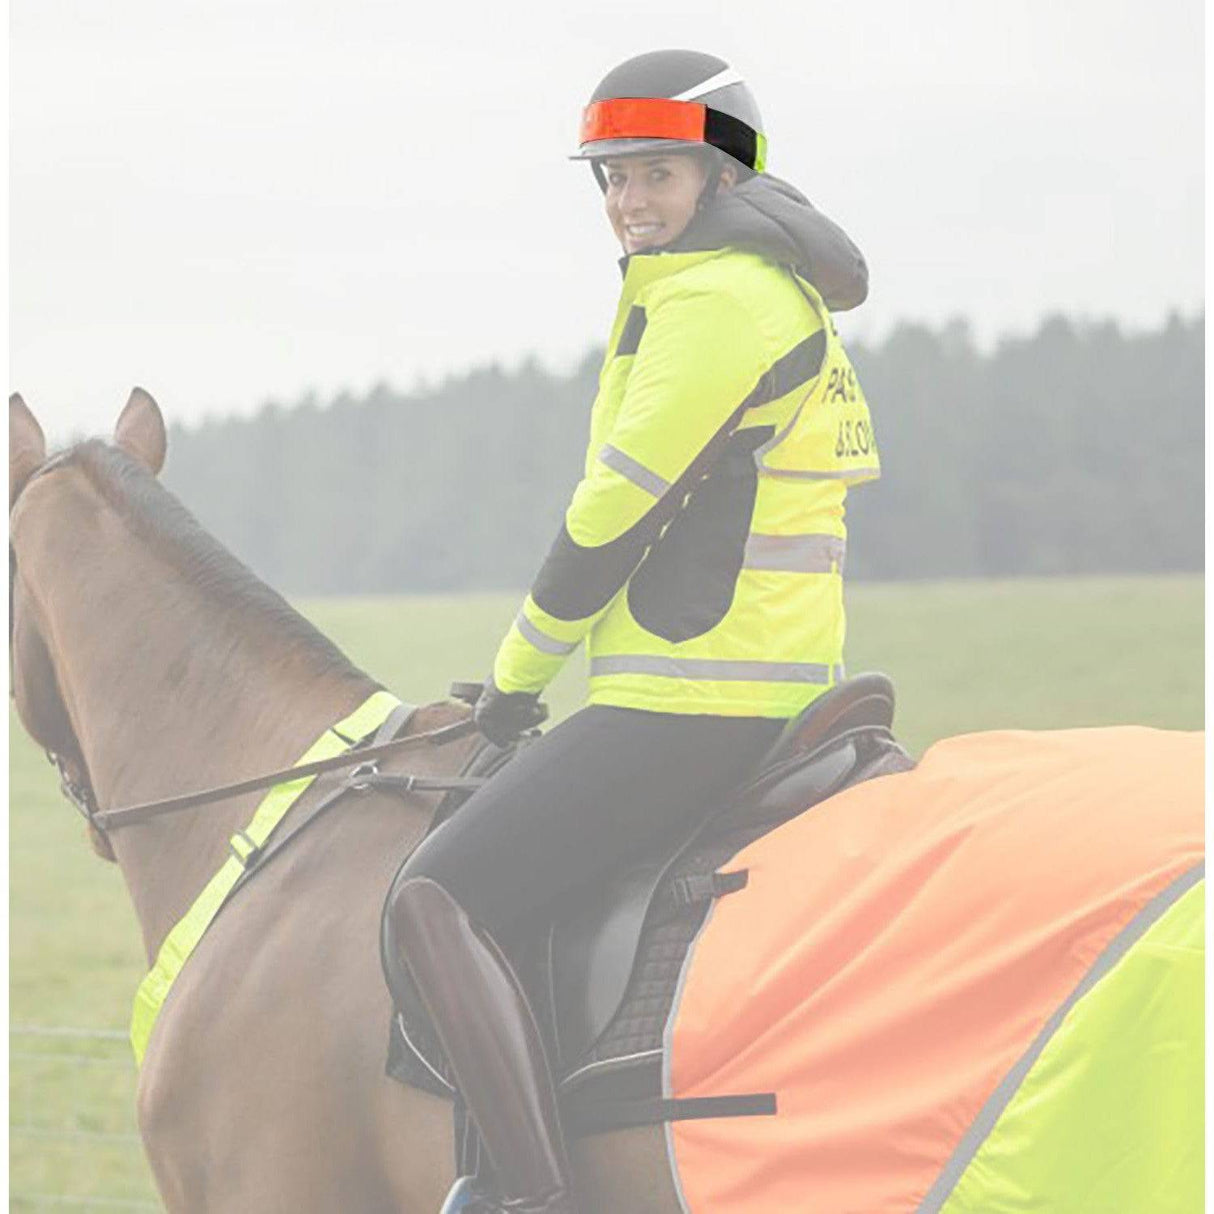 Equisafety Multi-Coloured Hatband Pink/Orange Barnstaple Equestrian Supplies